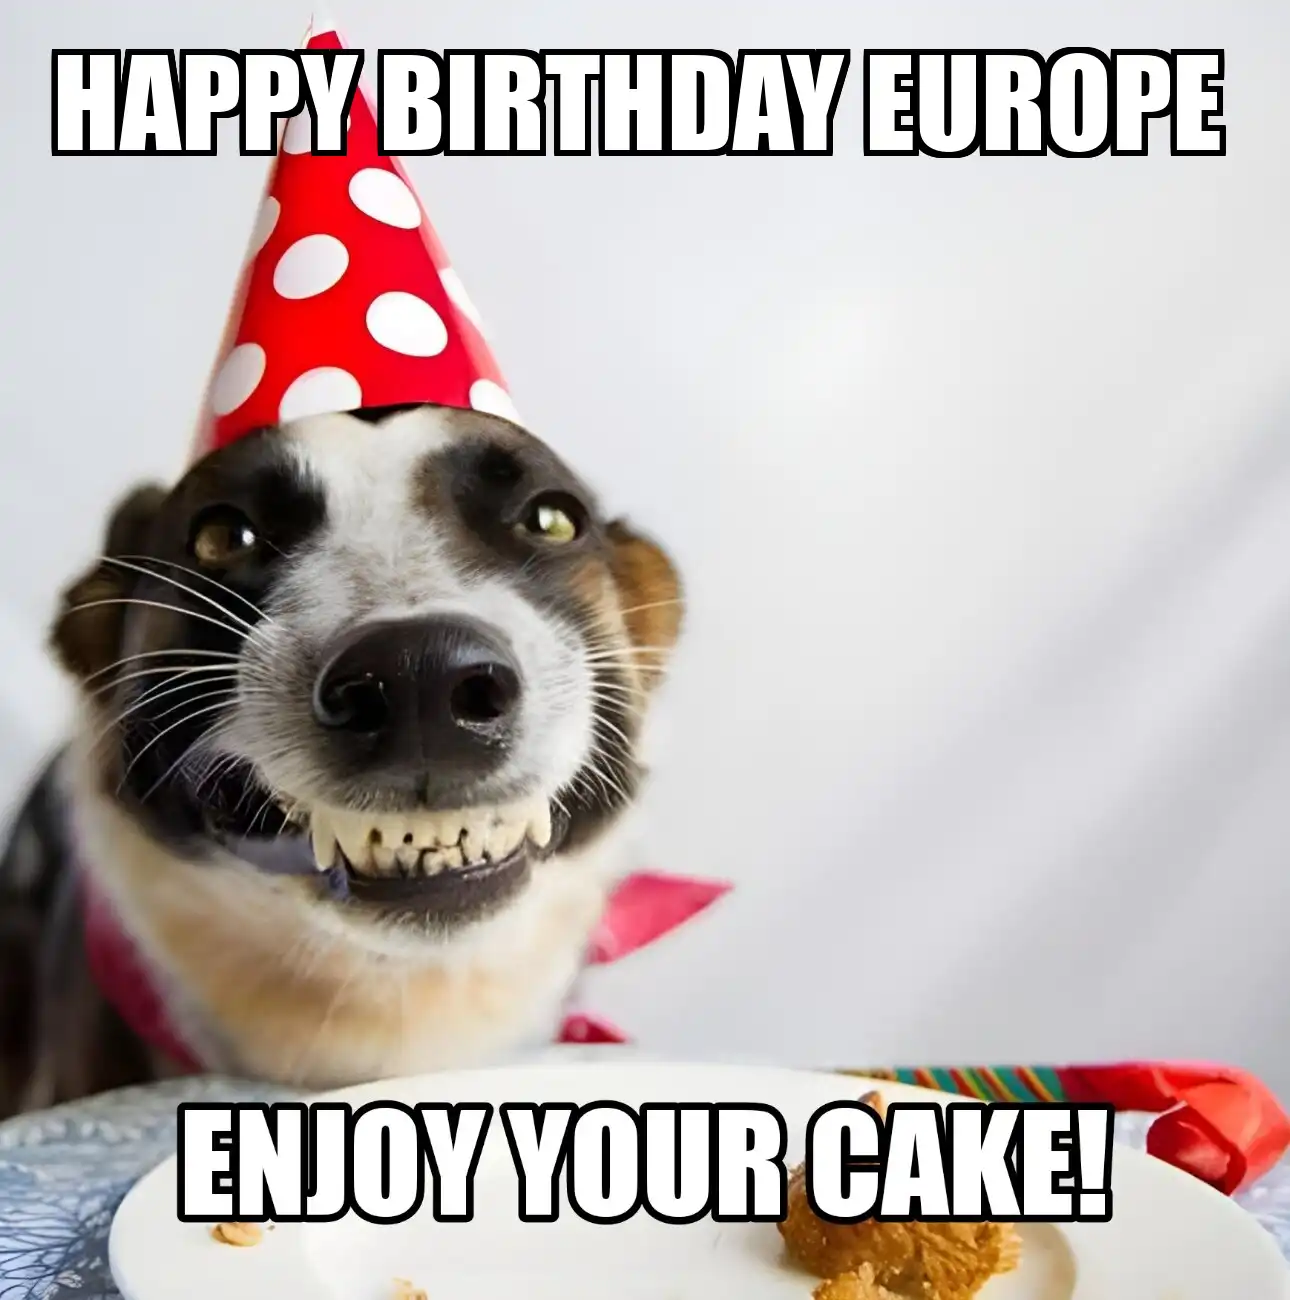 Happy Birthday Europe Enjoy Your Cake Dog Meme